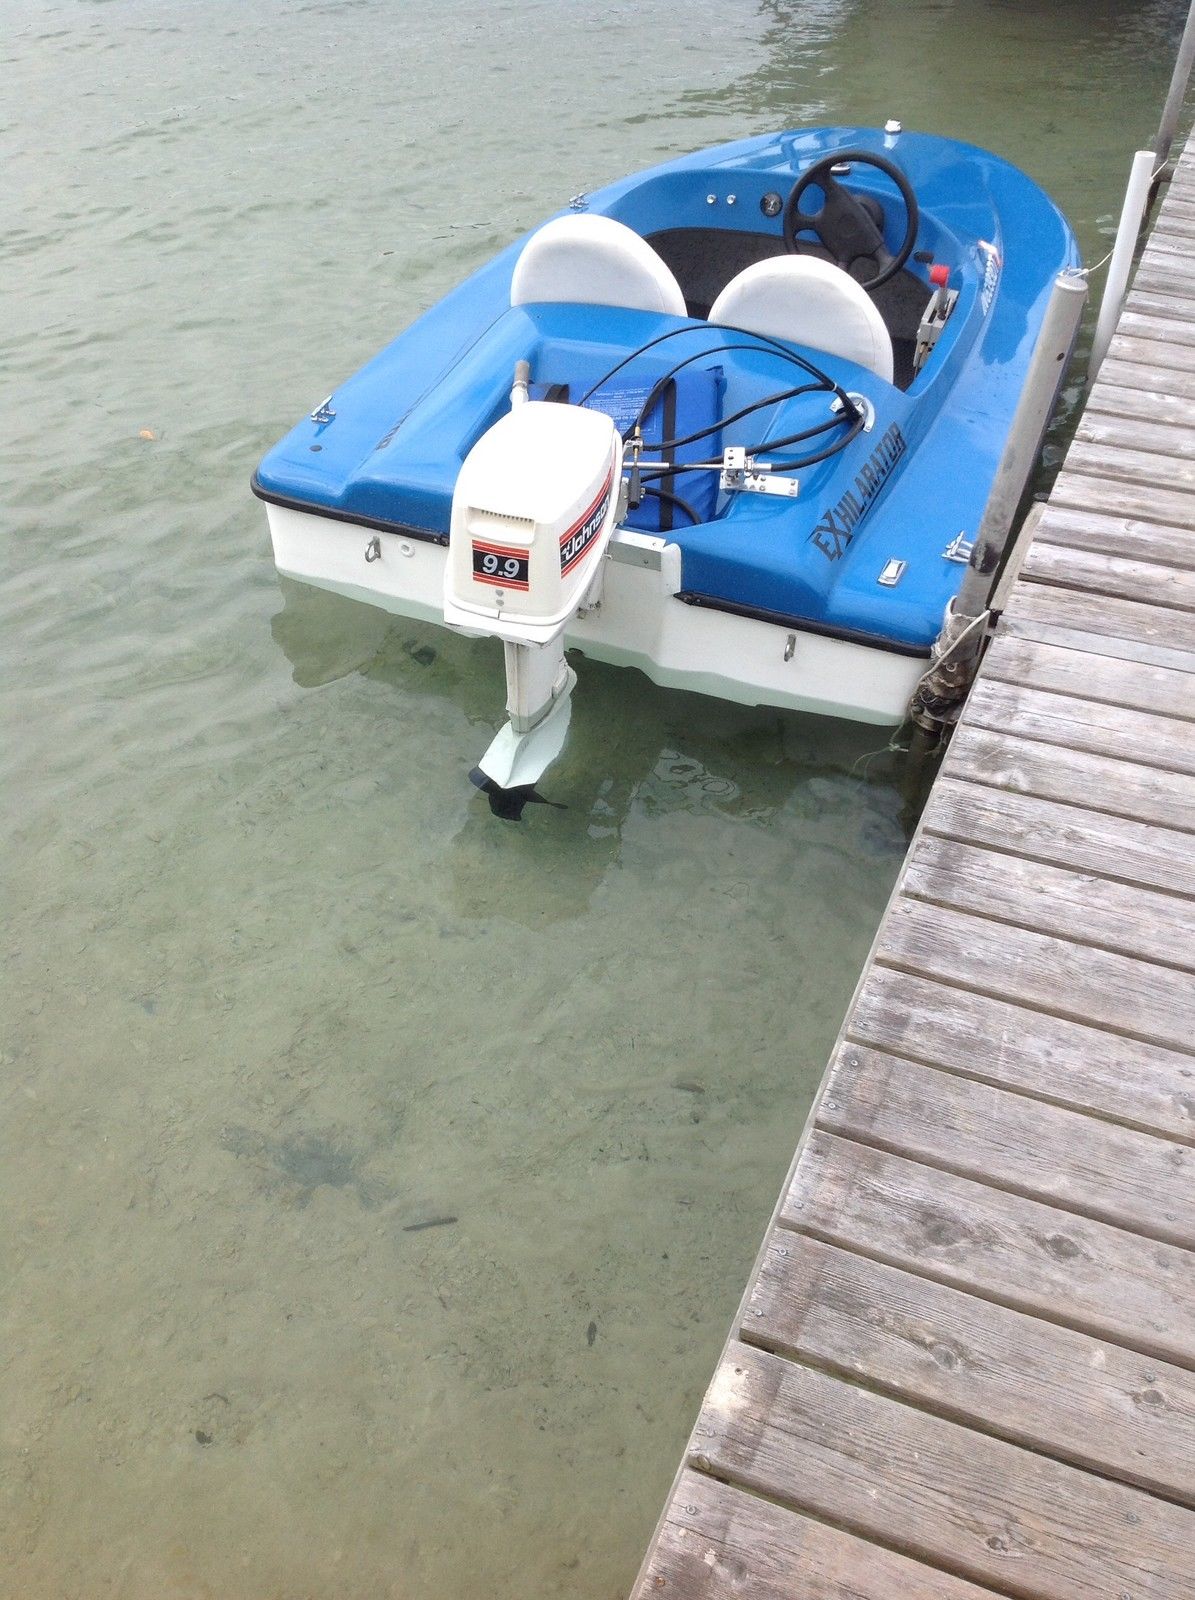 Exhilarator 101b Mini Speed Boat 2011 For Sale $2600.